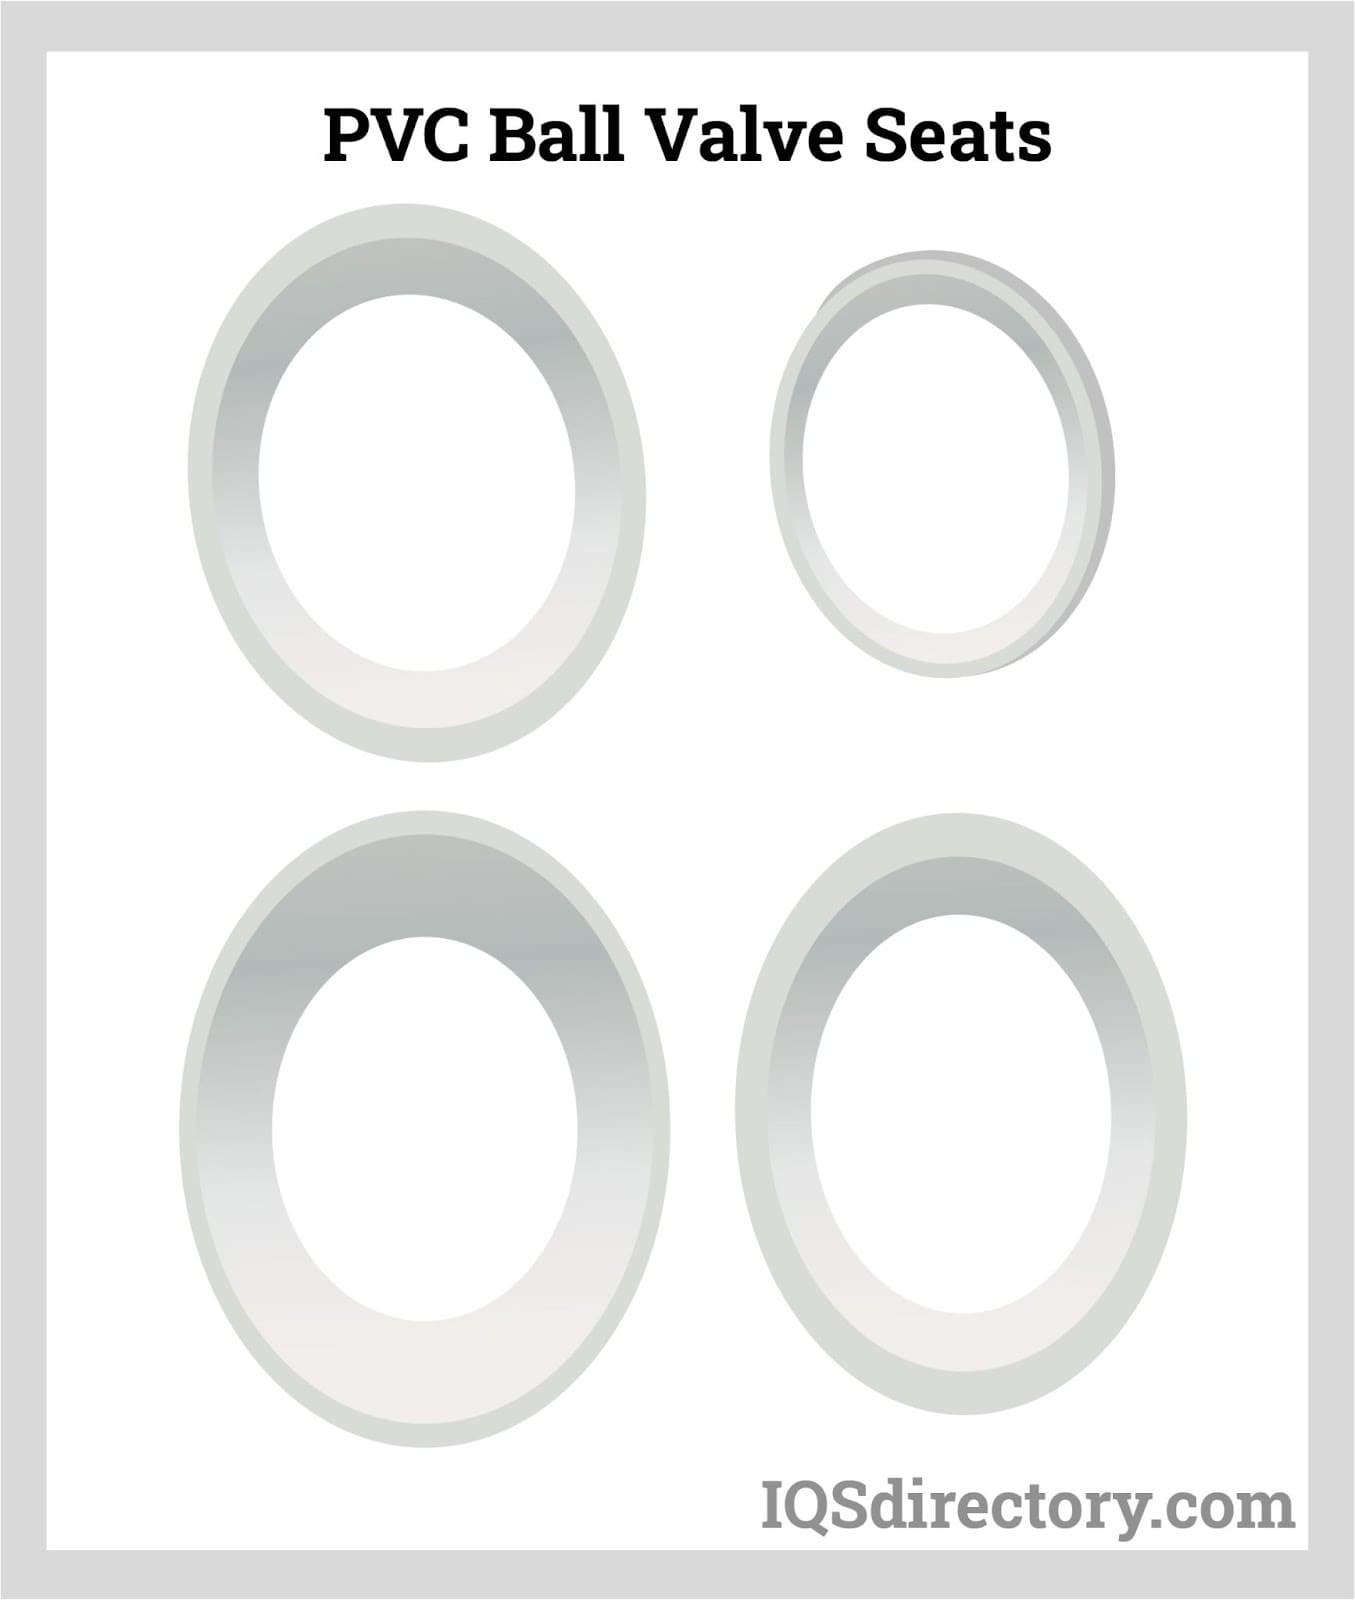 PVC Ball Valve Seats